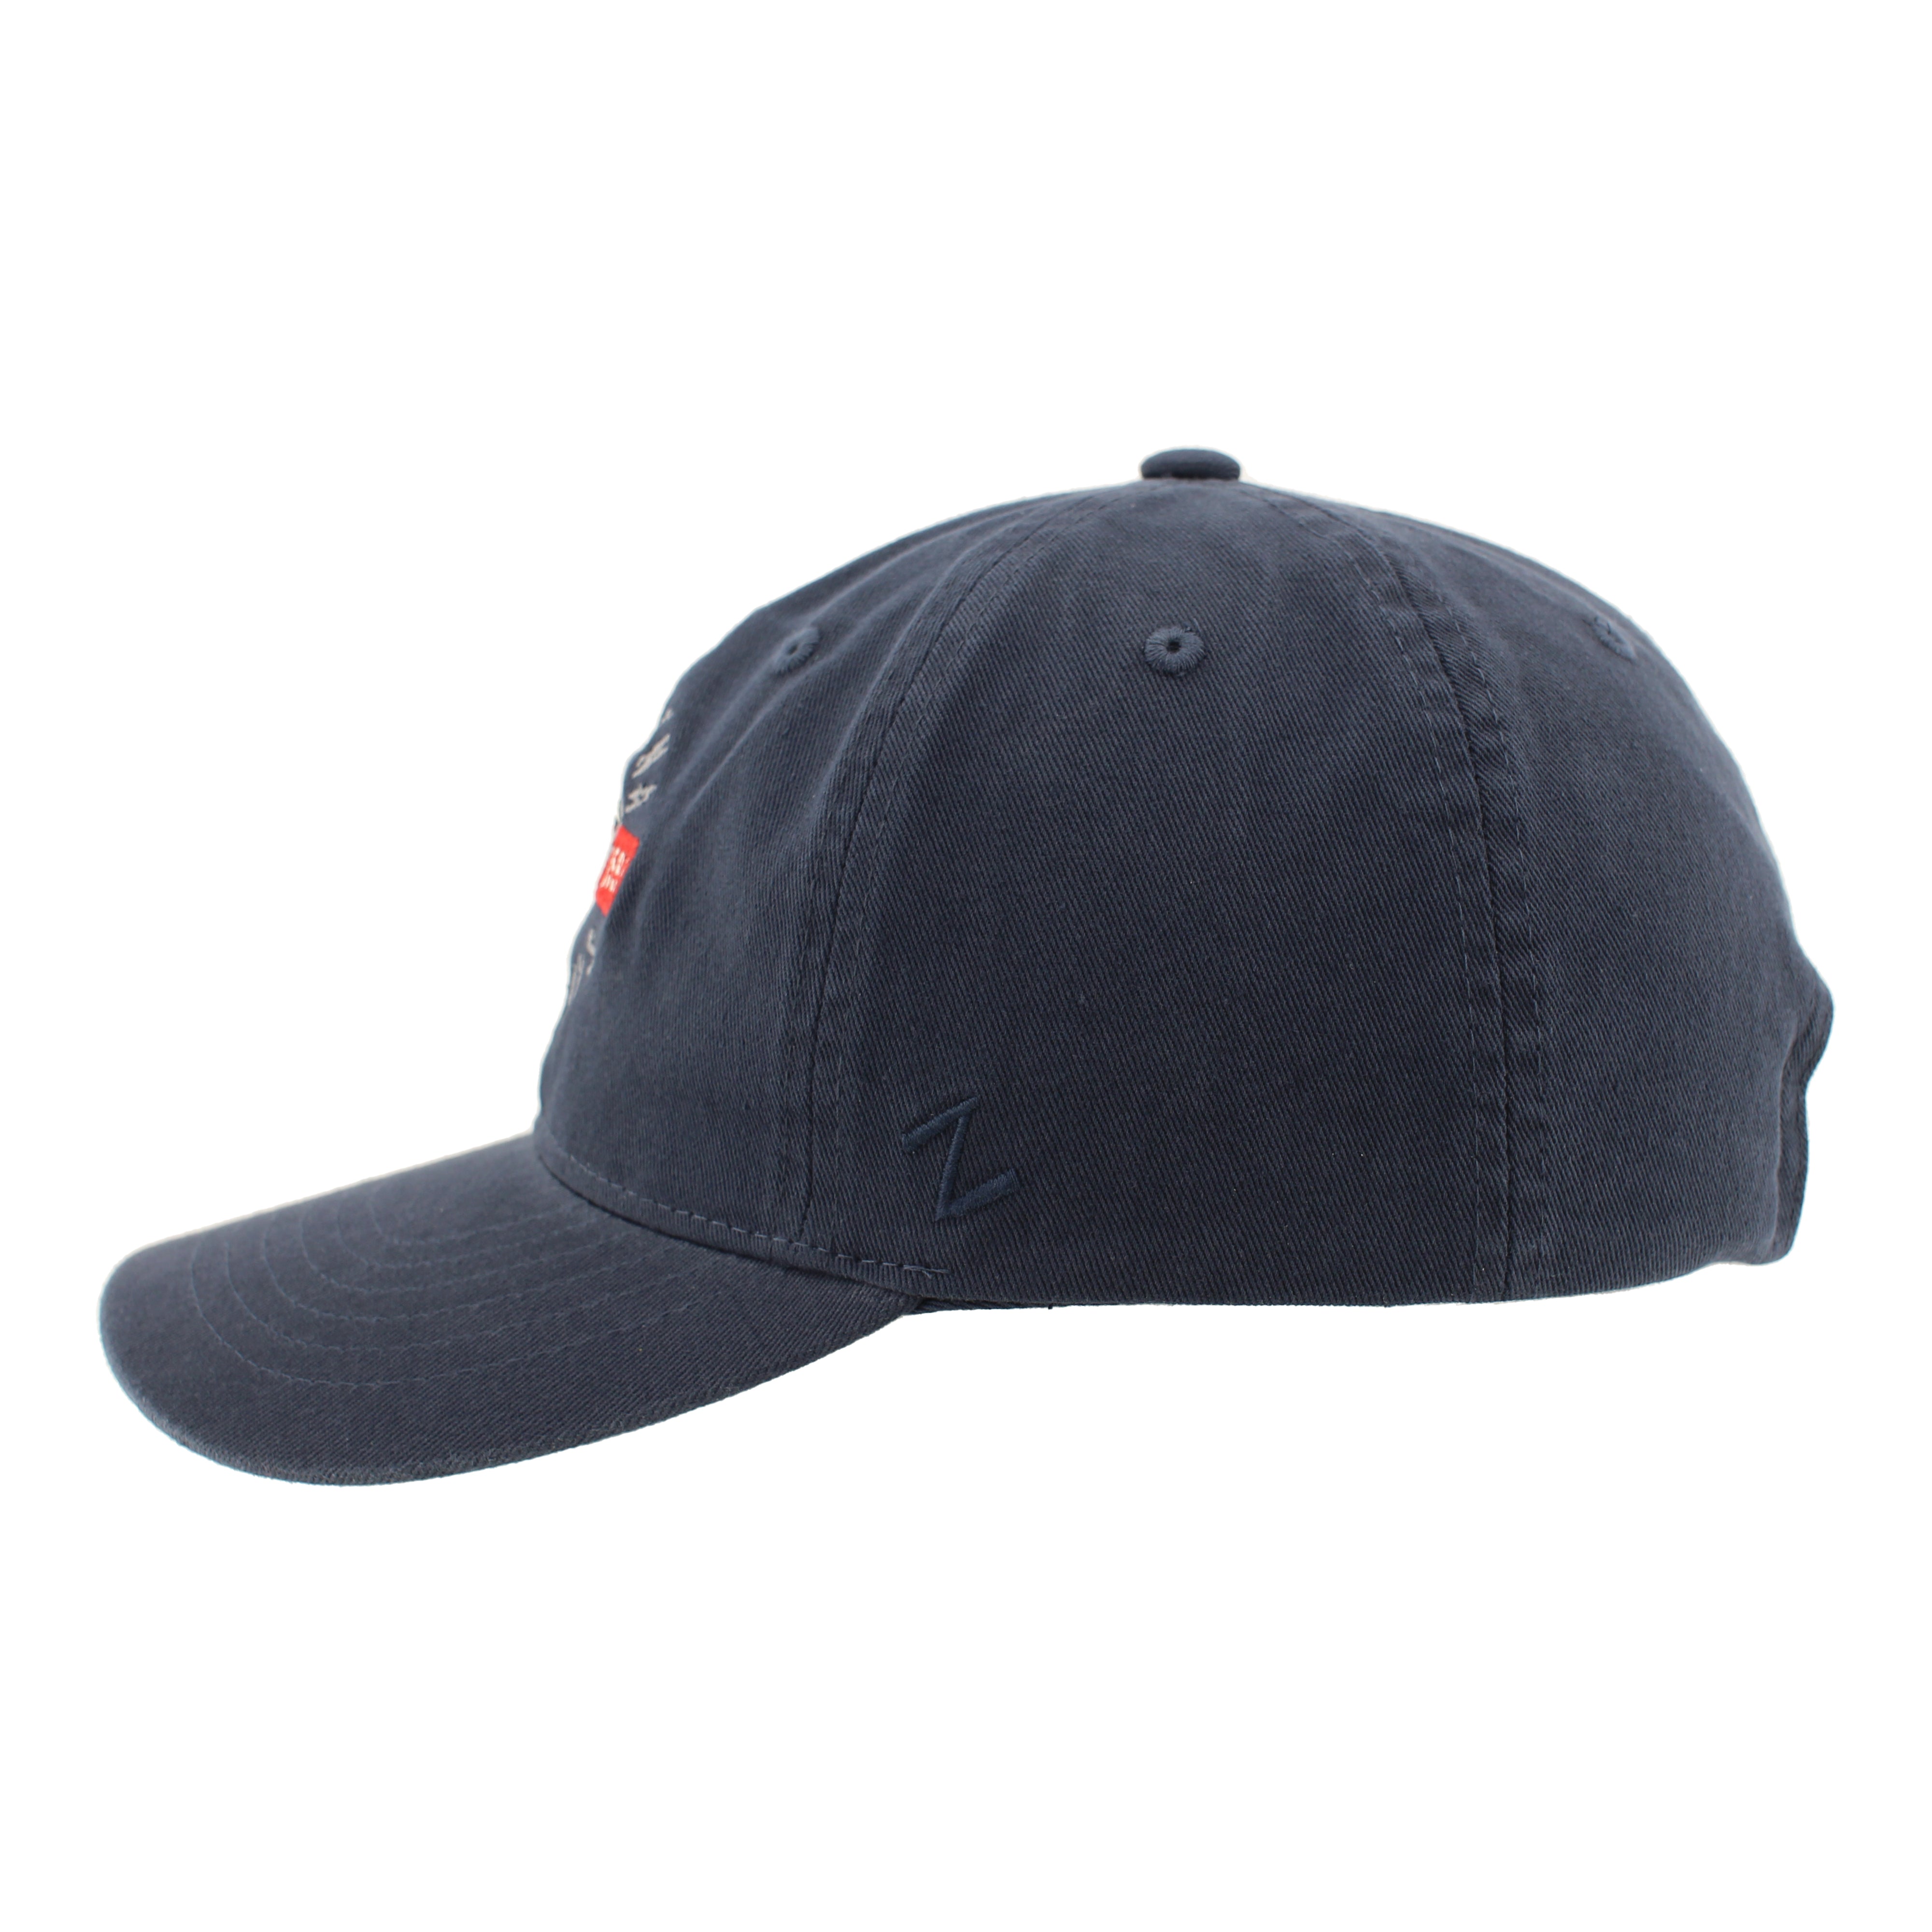 Zephyr Stingrays Display Adjustable Hat